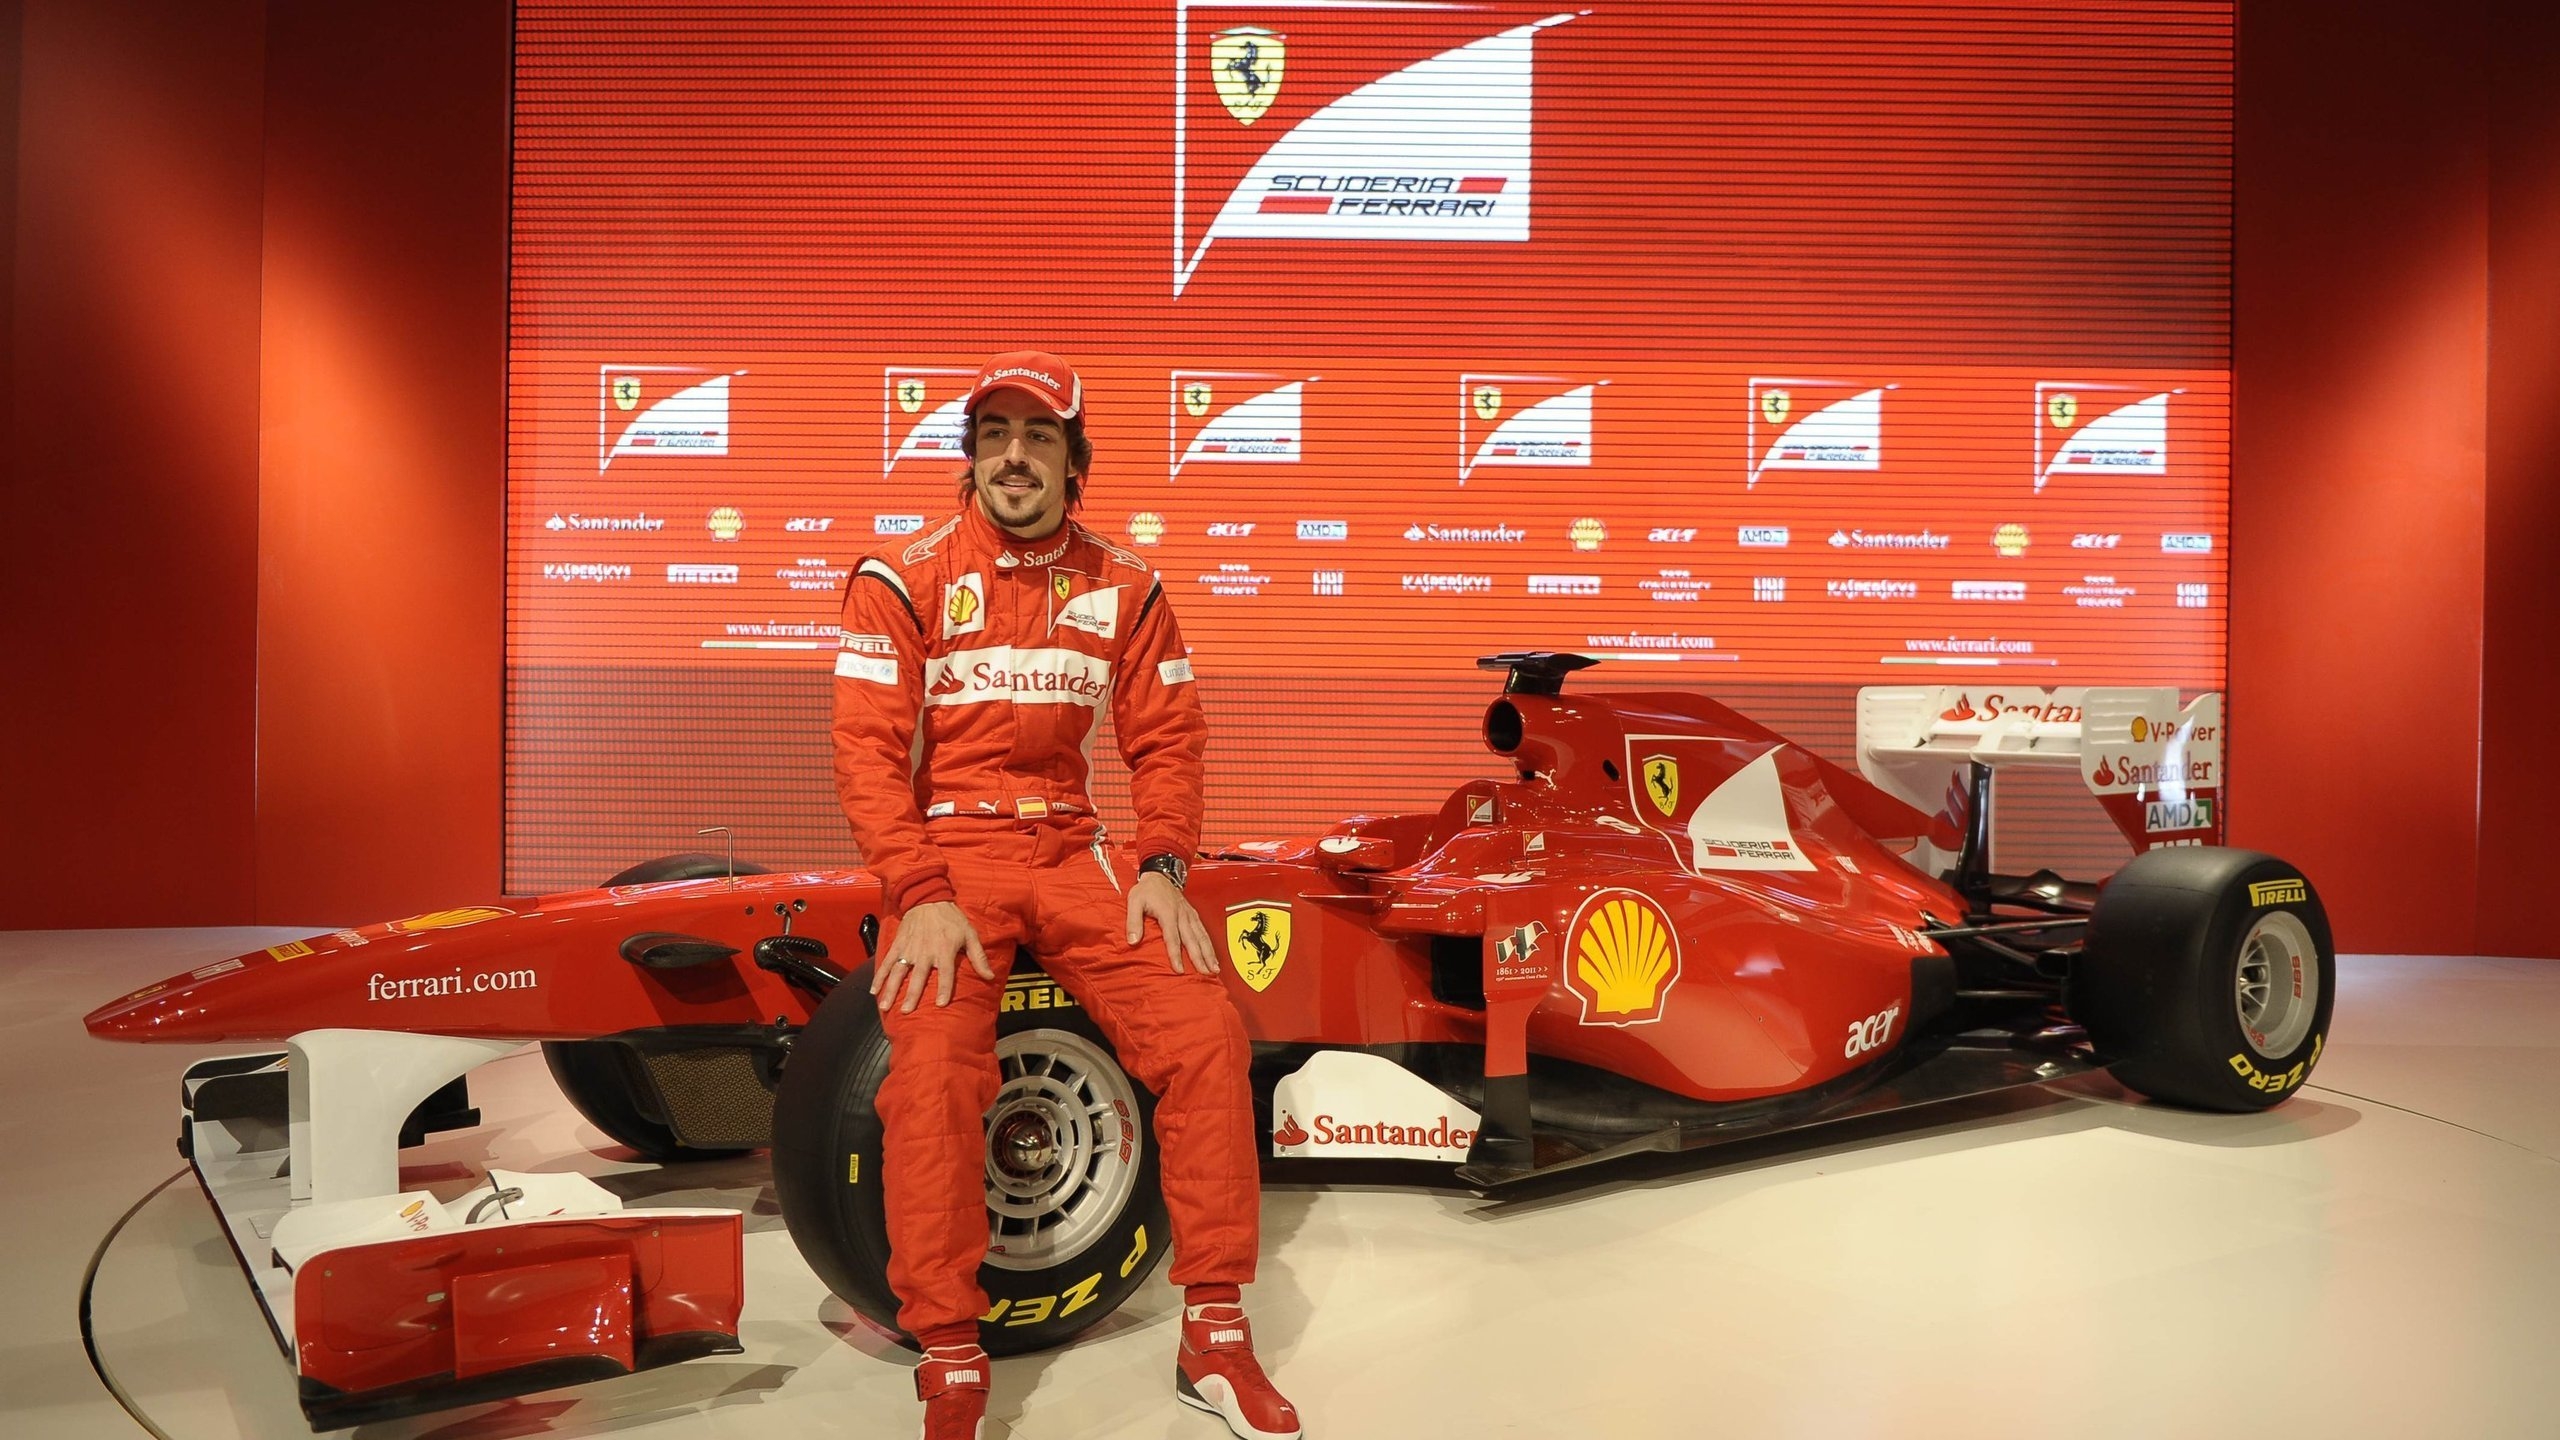 Fernando Alonso Ferrari for 2560x1440 HDTV resolution